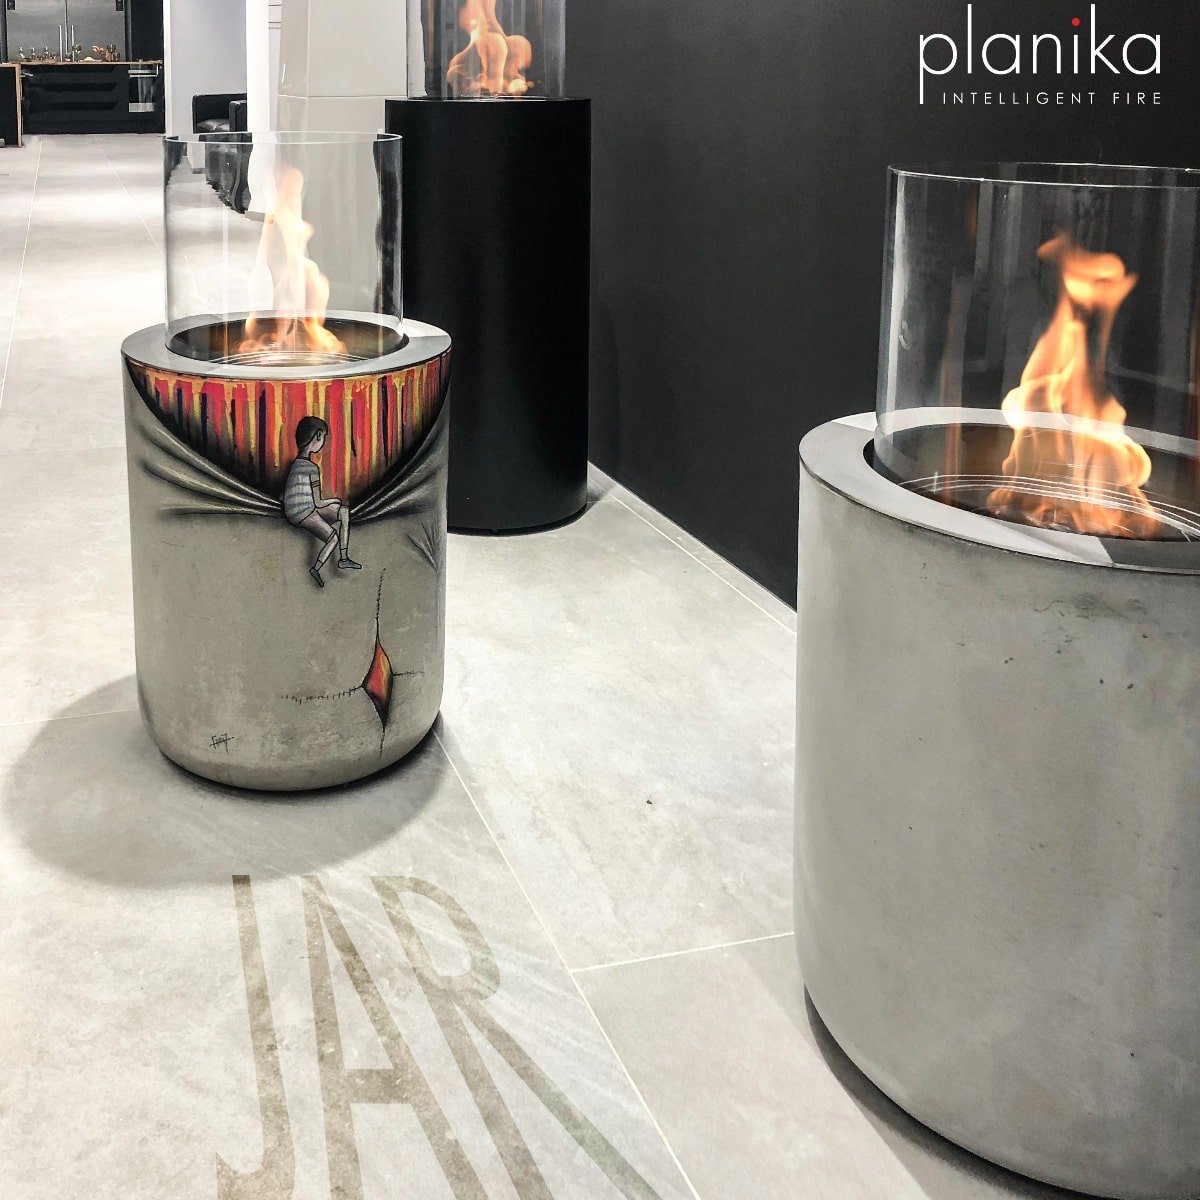 Planika Jar Bio Ethanol Fireplace Commerce by Christopher Pillet - Outdoorium